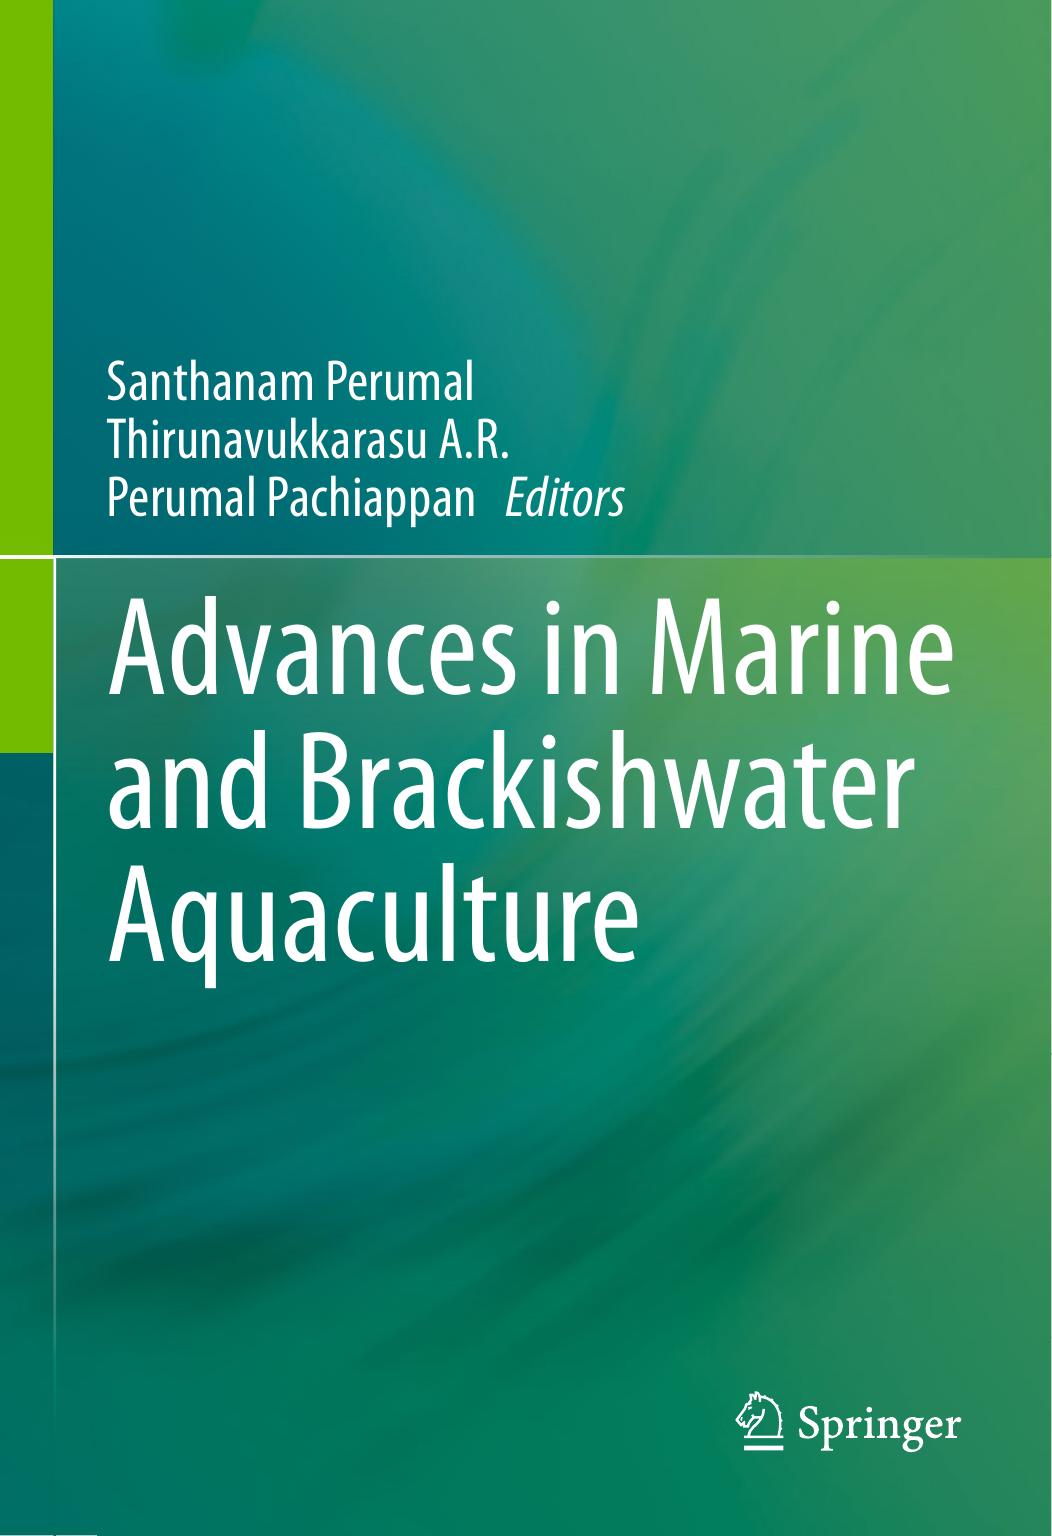 Advances in Marine and Brackishwater Aquaculture-Springer (2015)